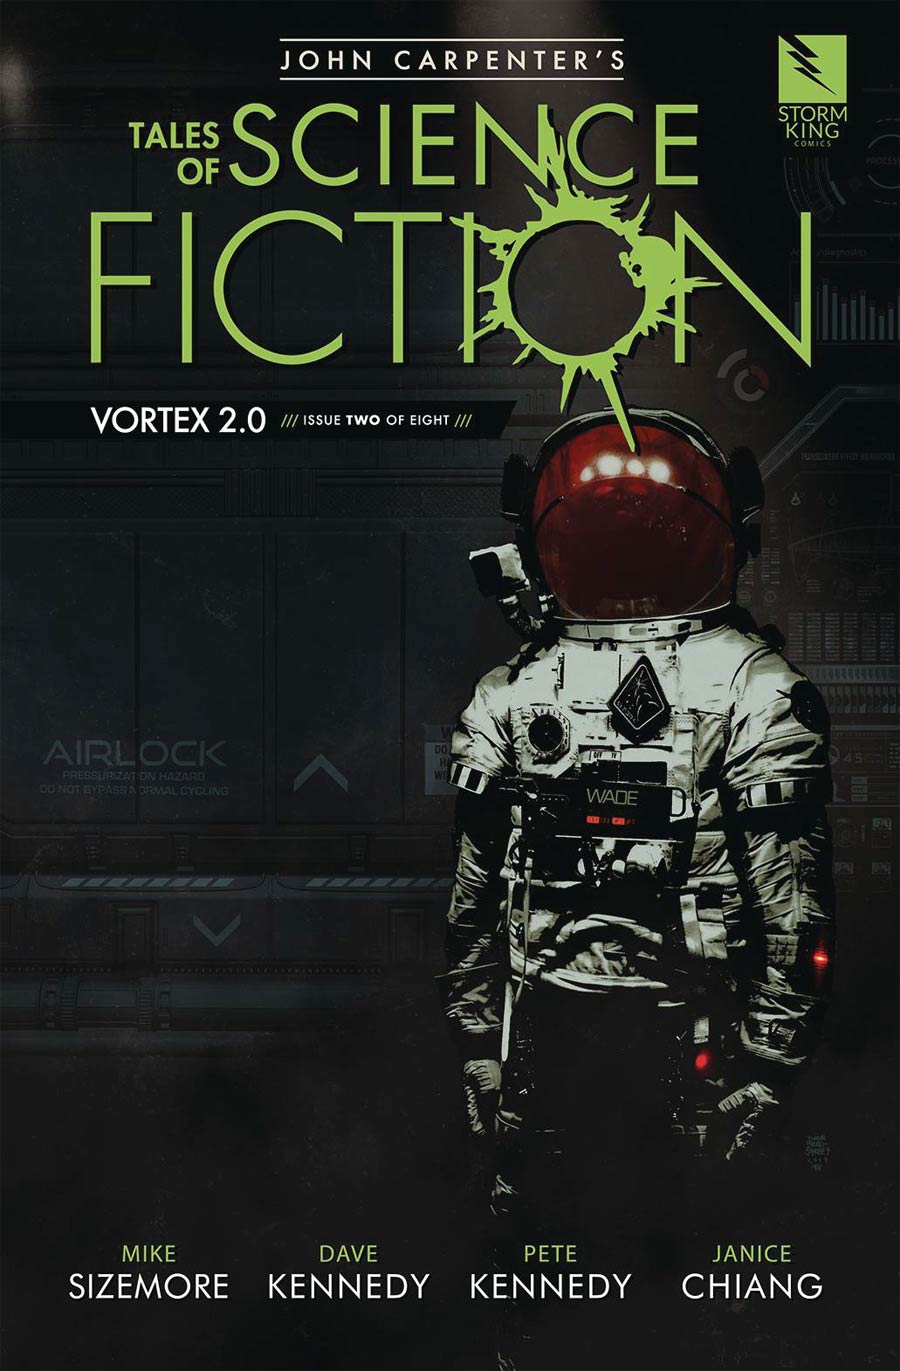 John Carpenters Tales Of Science Fiction Vortex 2.0 #2